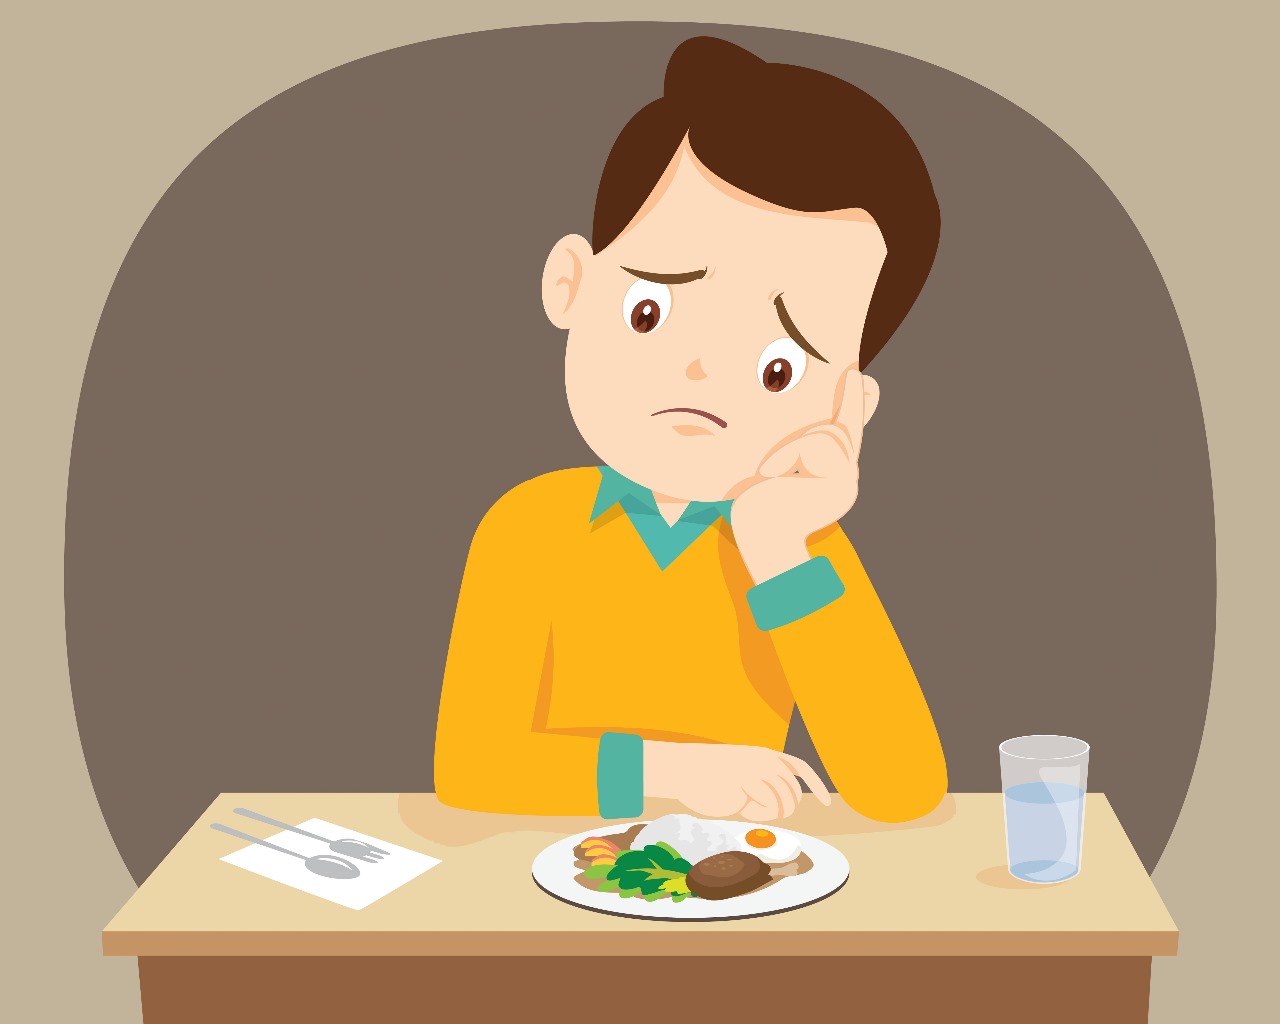 How do I treat loss of appetite?